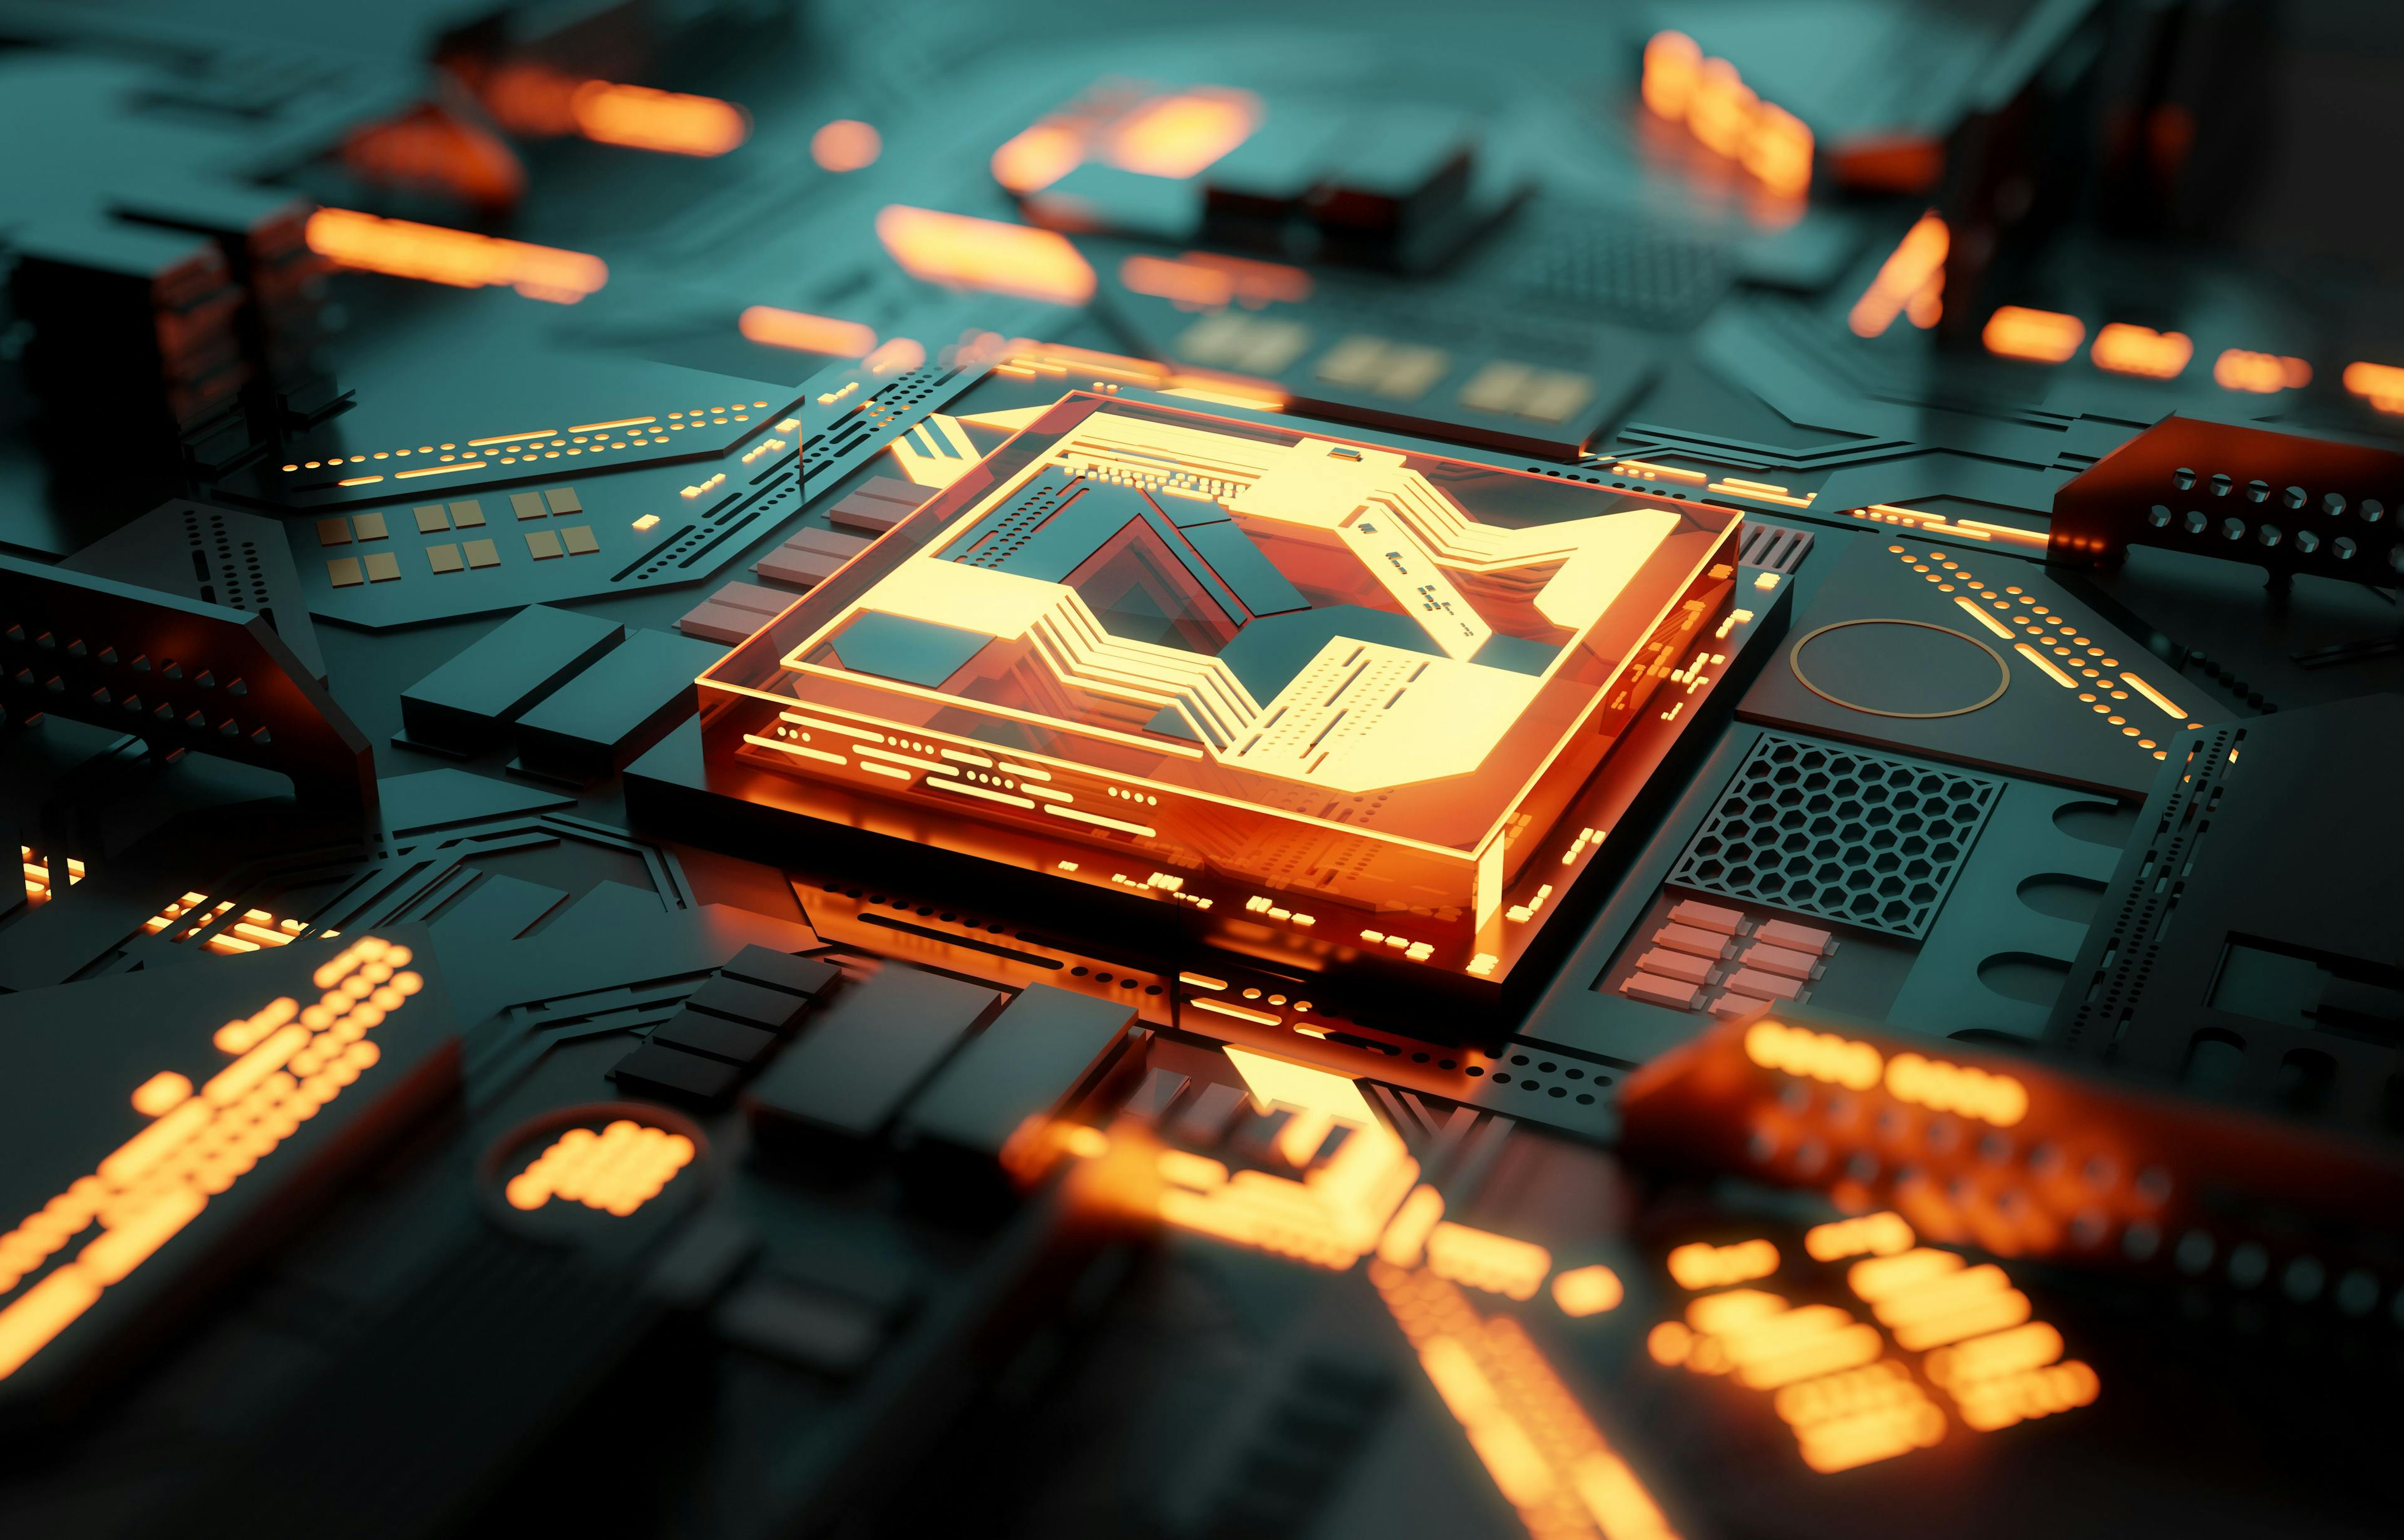 Futuristic CPU processor and machine learning concept. 3D illustration | Image Credit: © James Thew - stock.adobe.com